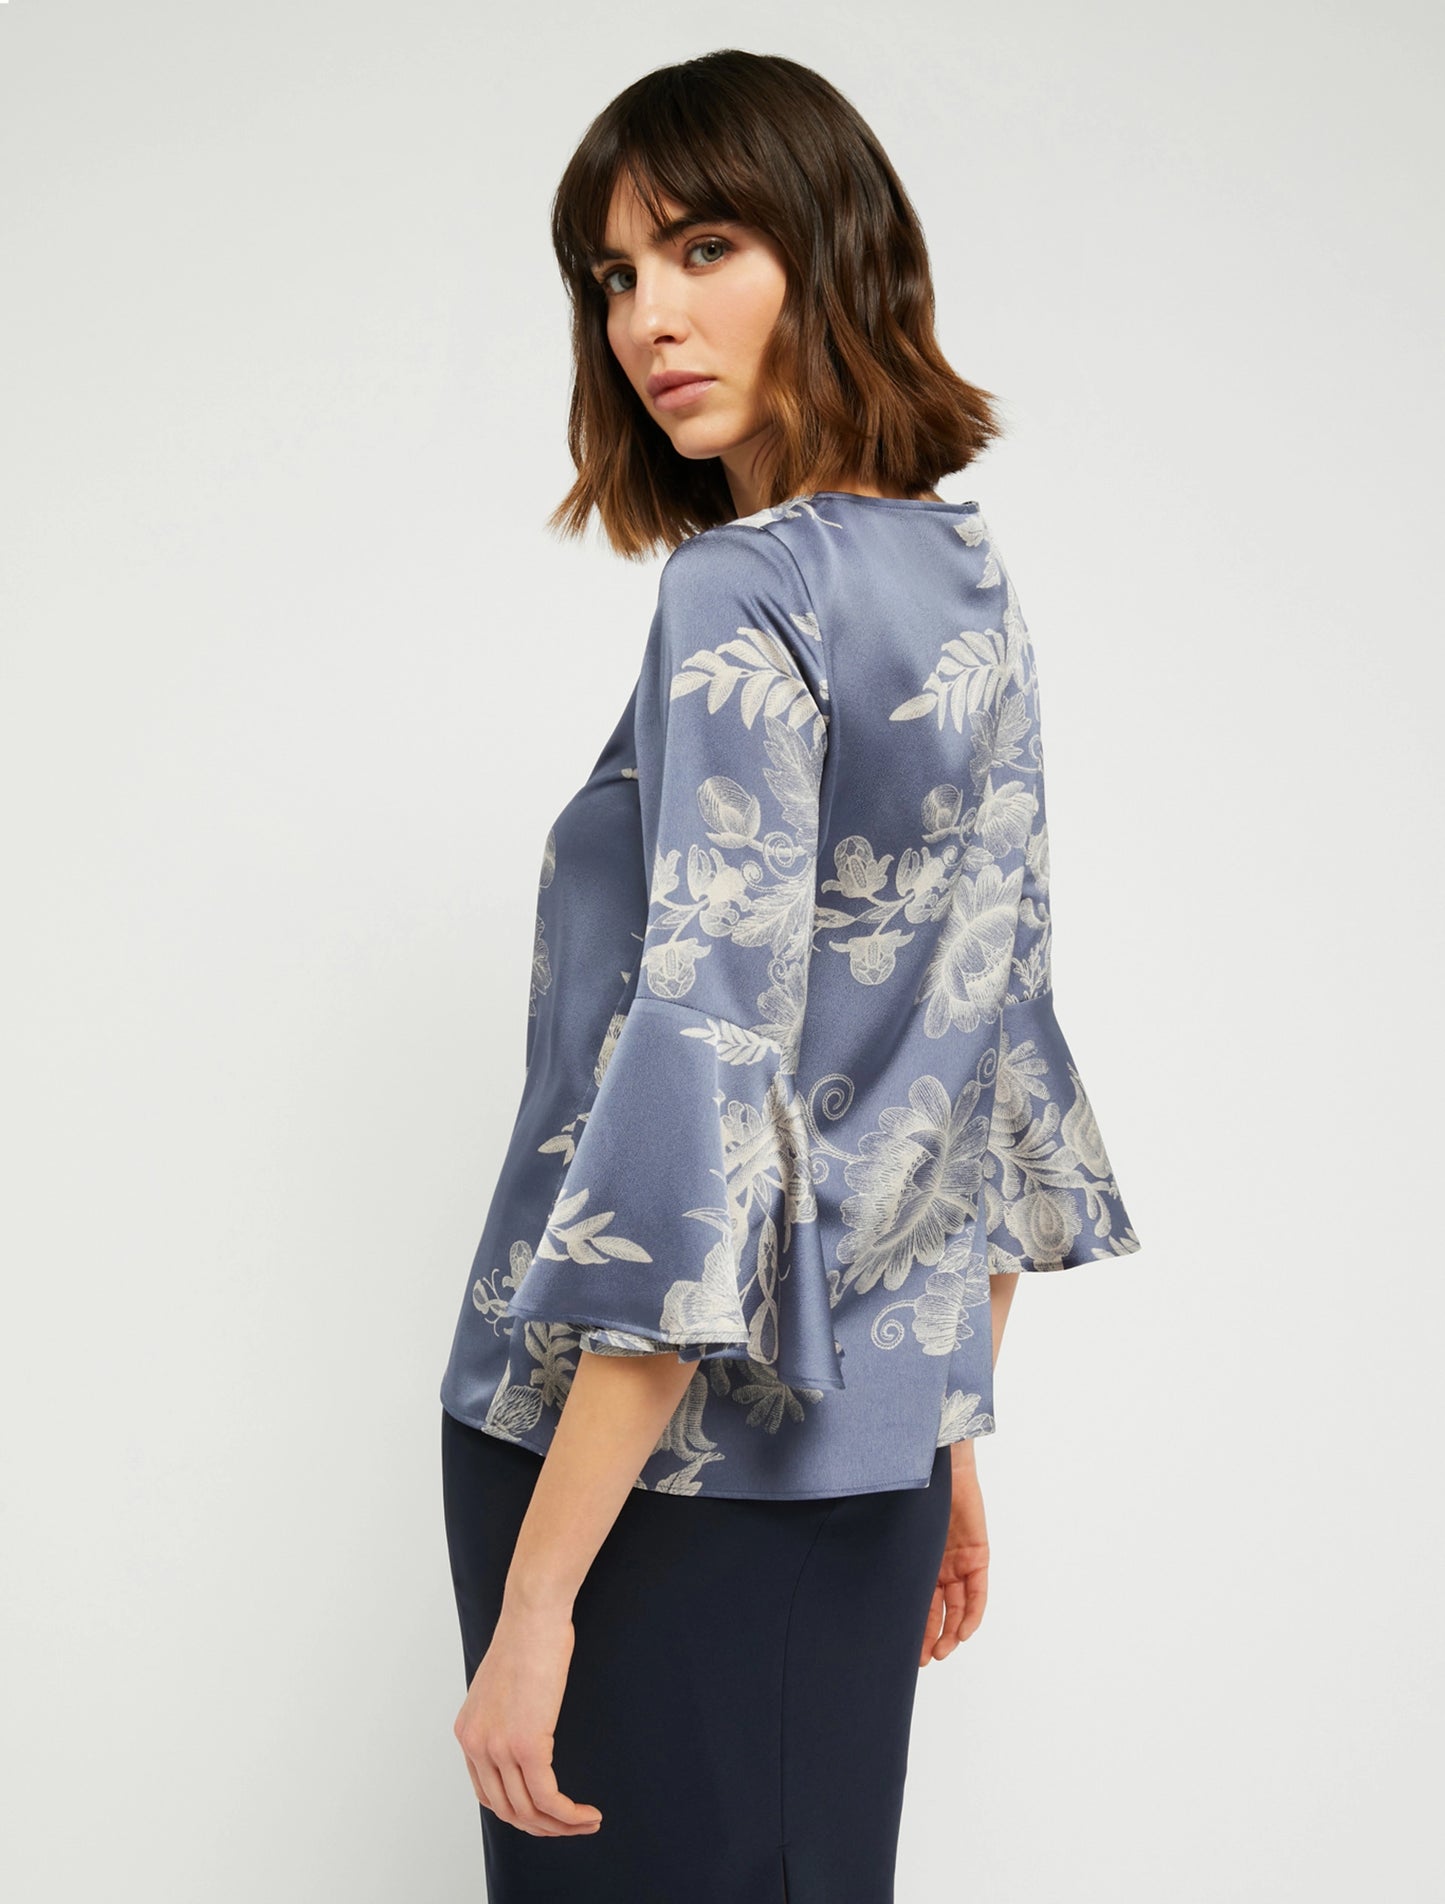 Penny Black | Metodico seersucker satin blouse - navy blue pattern or beige pattern